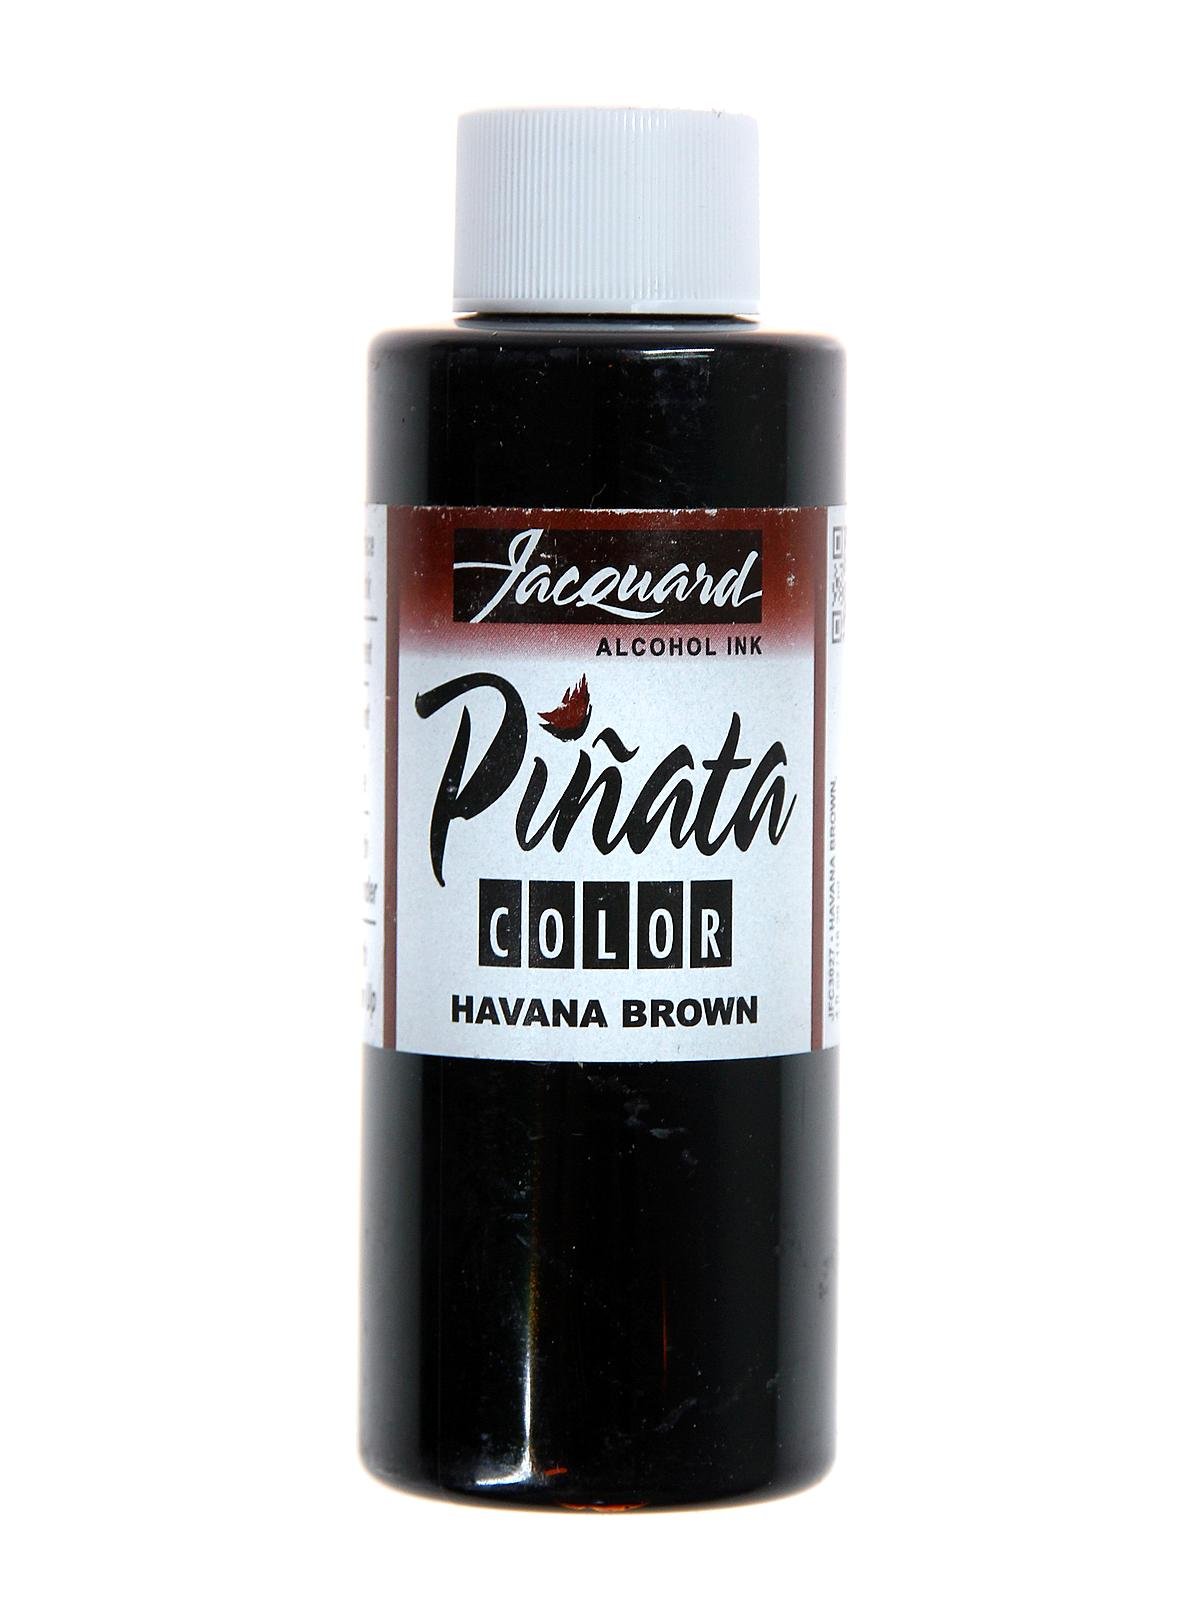 Jacquard Pinata Color Alcohol Ink- Silver